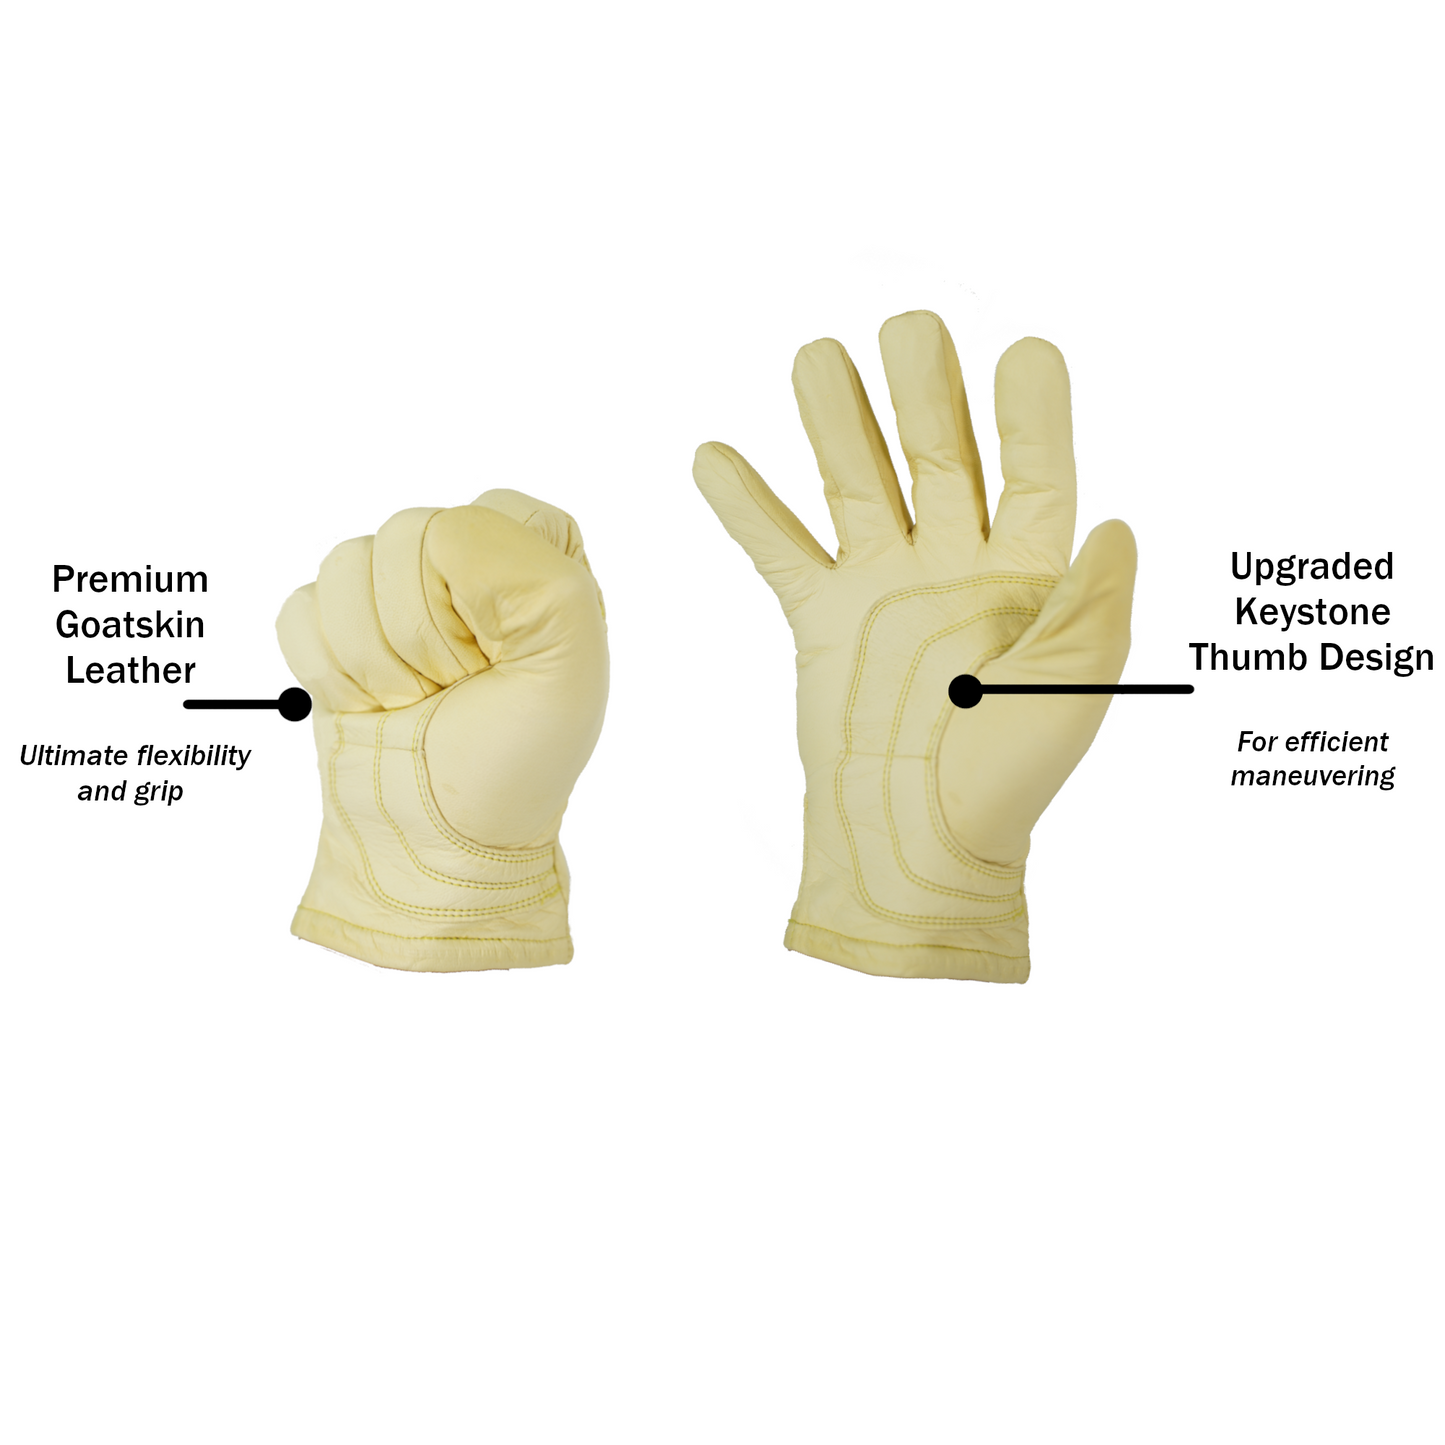 Copper Advanced Tech Work gloves | Premium Goatskin Leather, Extreme Flexibility, Safety Work Gloves